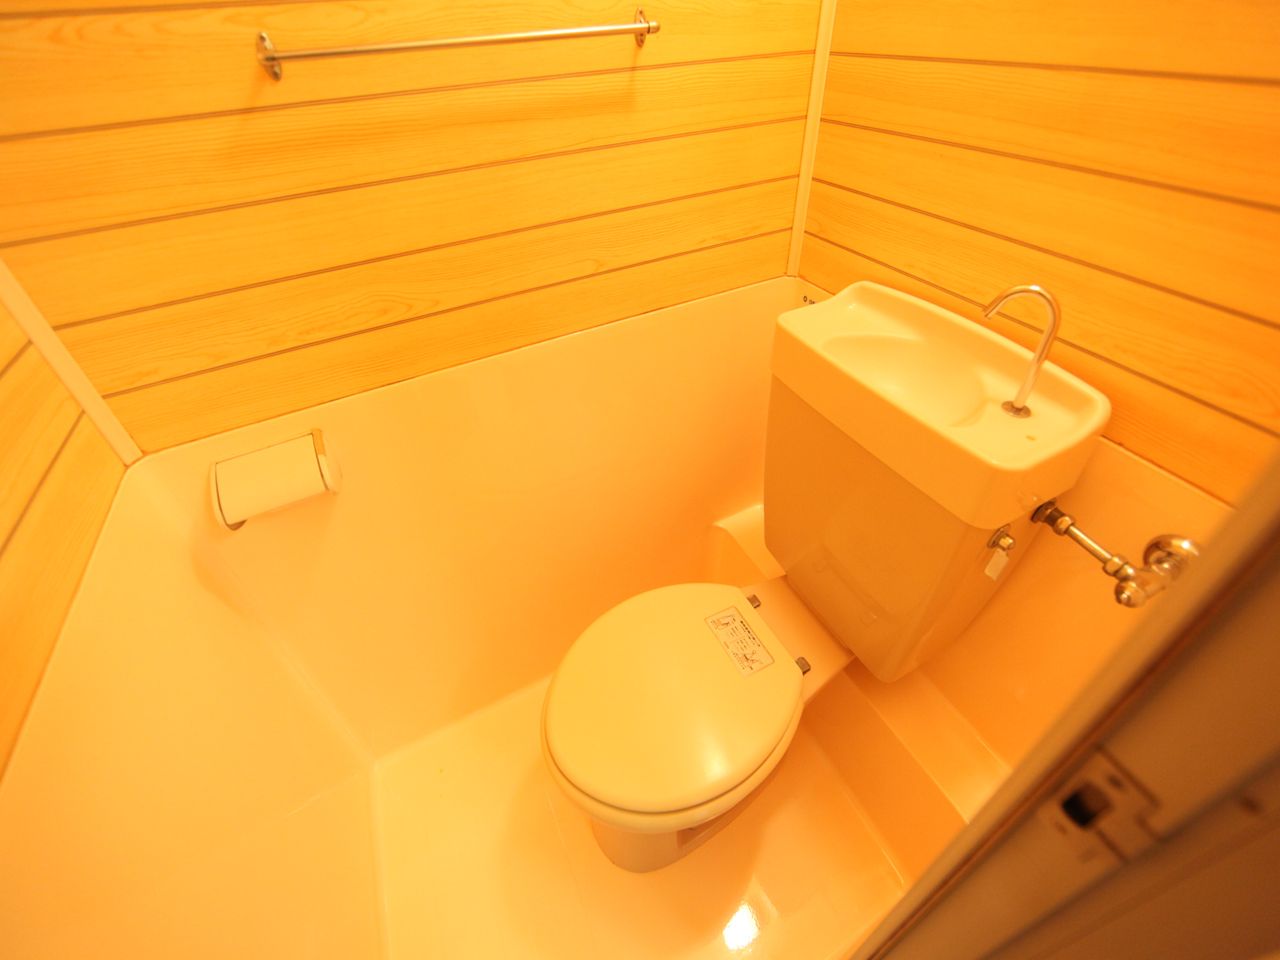 Toilet. bus ・ Restroom Warm water washing heating toilet seat installation Allowed